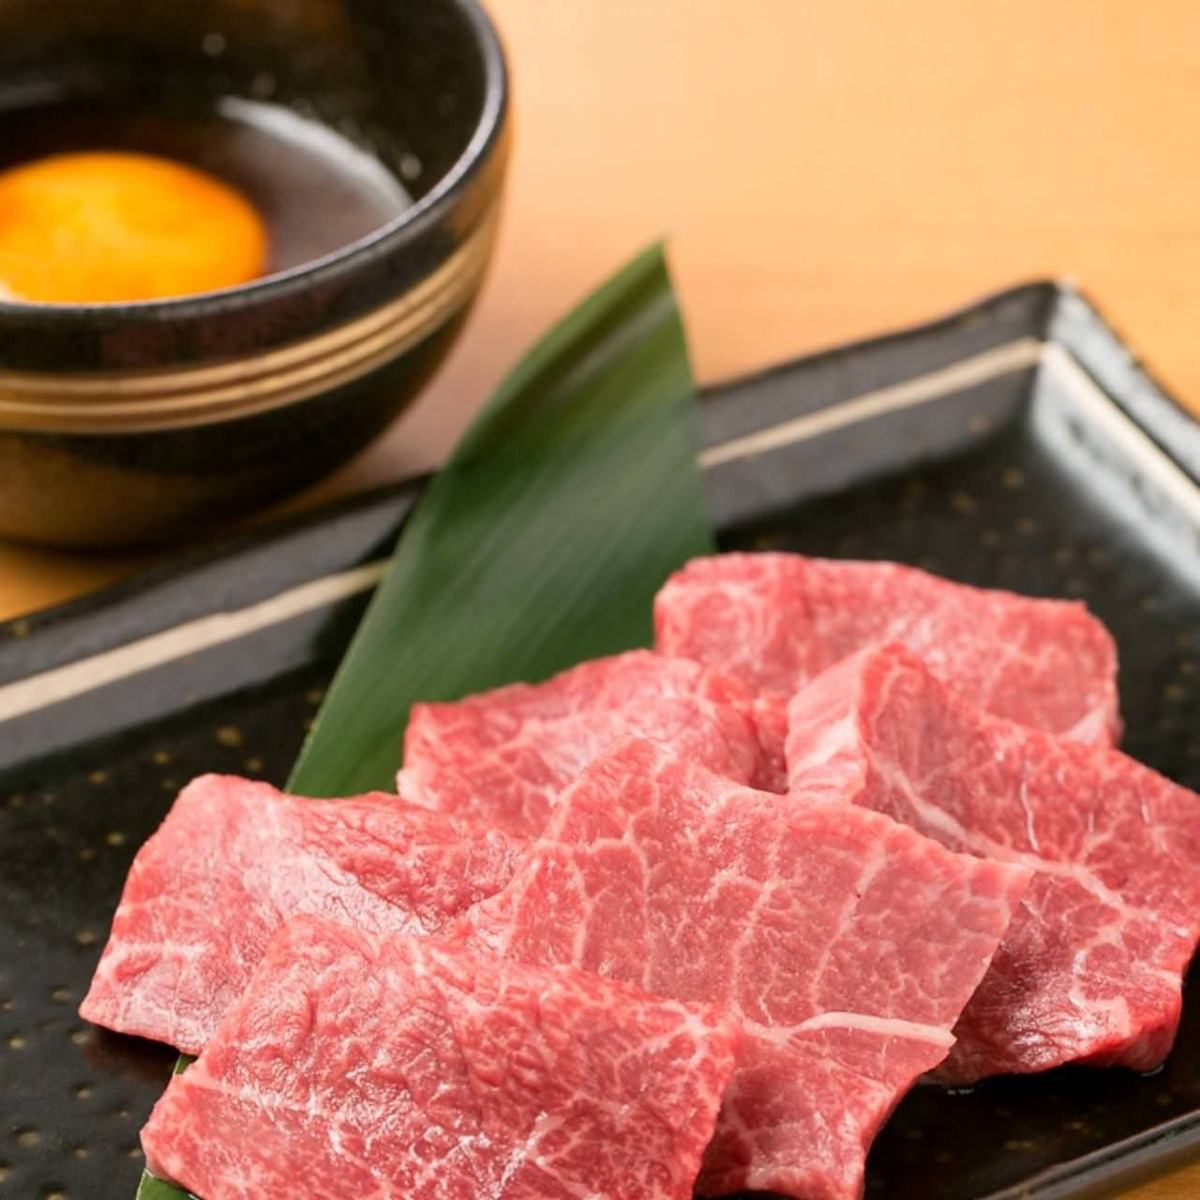 Please enjoy the phantom Japanese beef "Ozaki beef" at our shop.